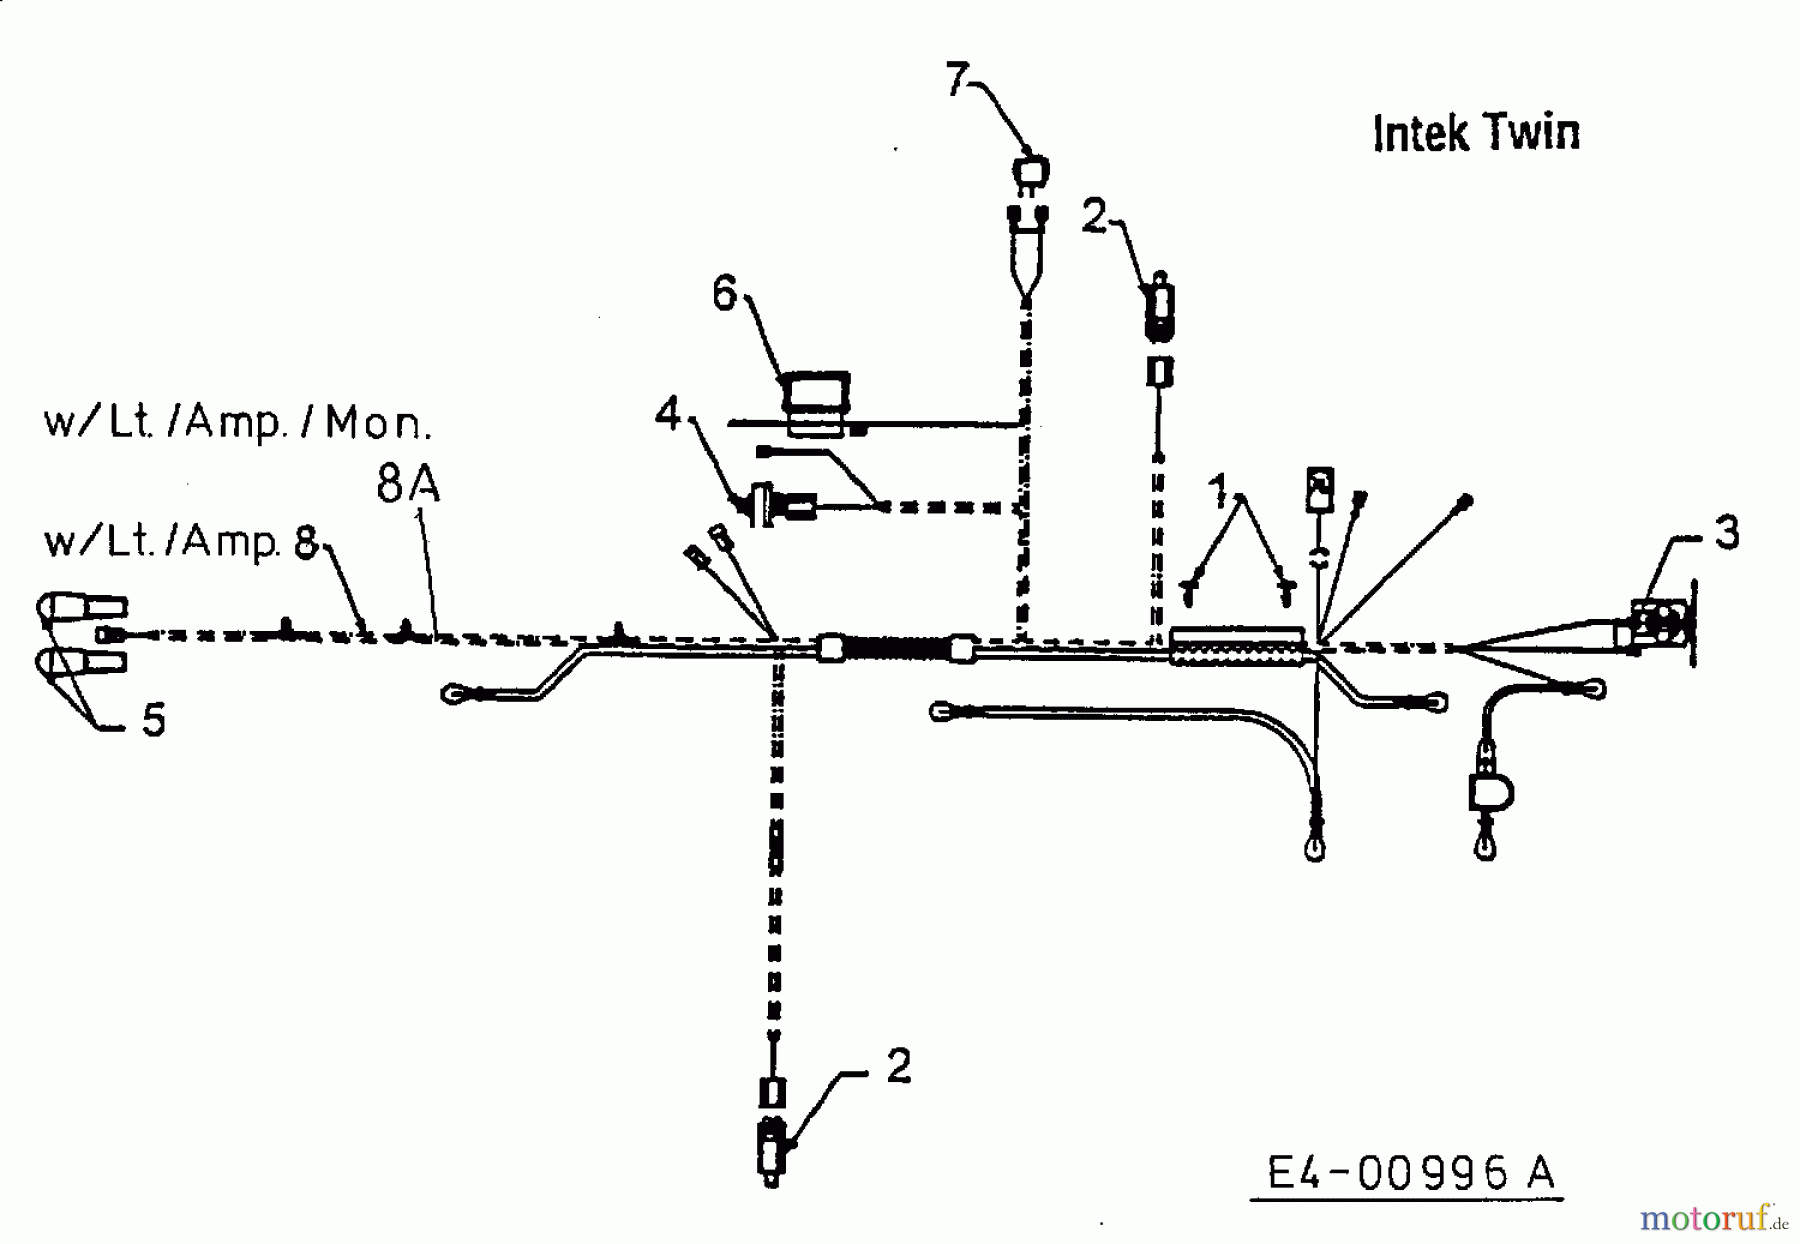  MTD Lawn tractors H 160 13AF695G678  (1998) Wiring diagram Intek Twin